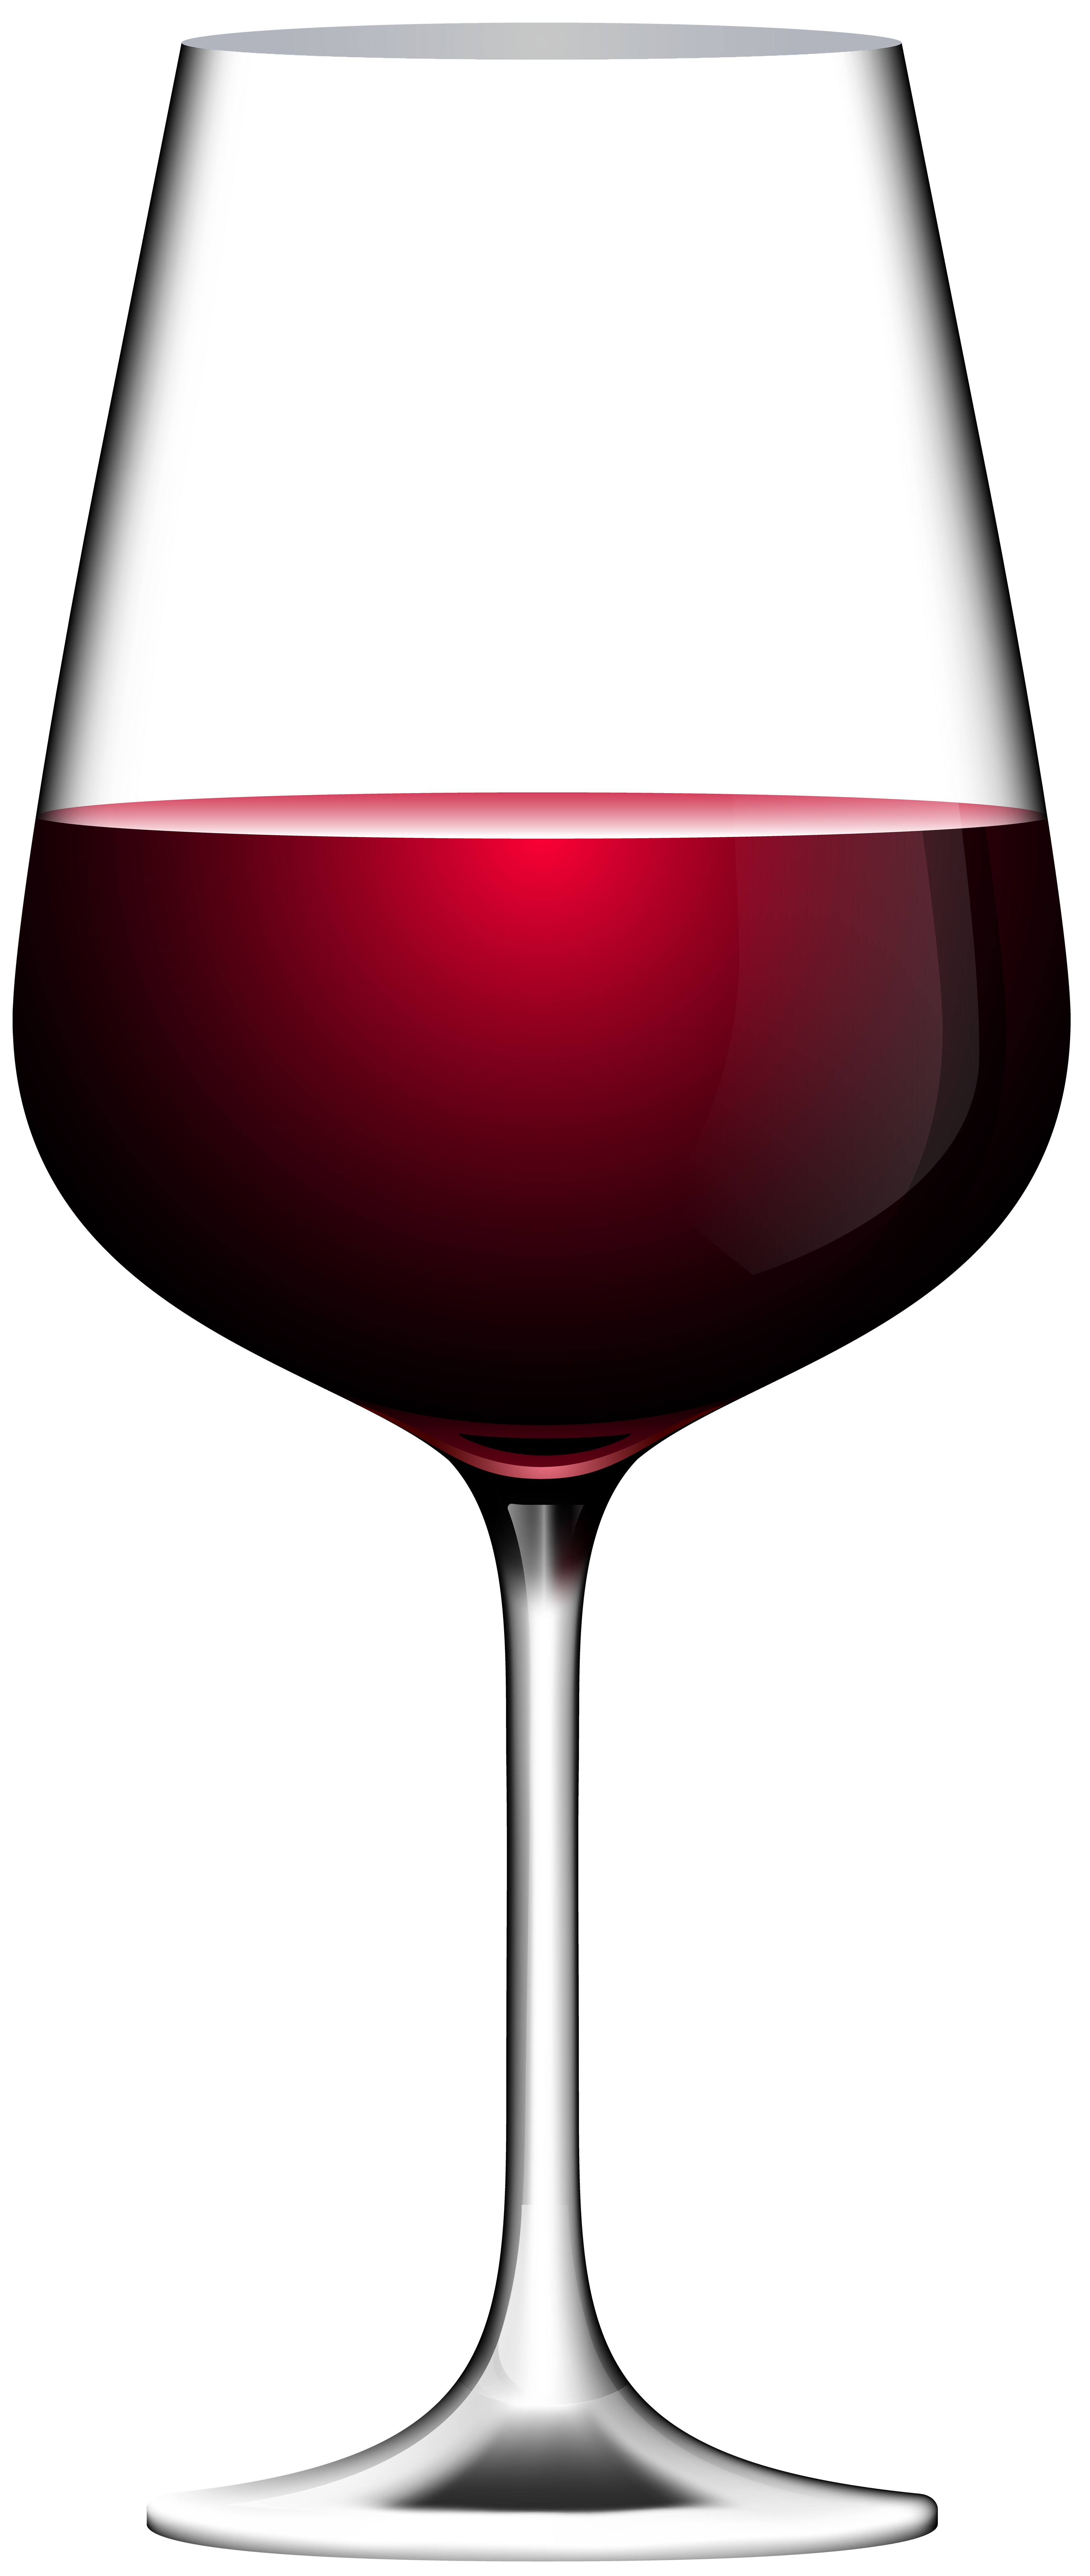 Red Wine Glass Transparent Clip Art Image 